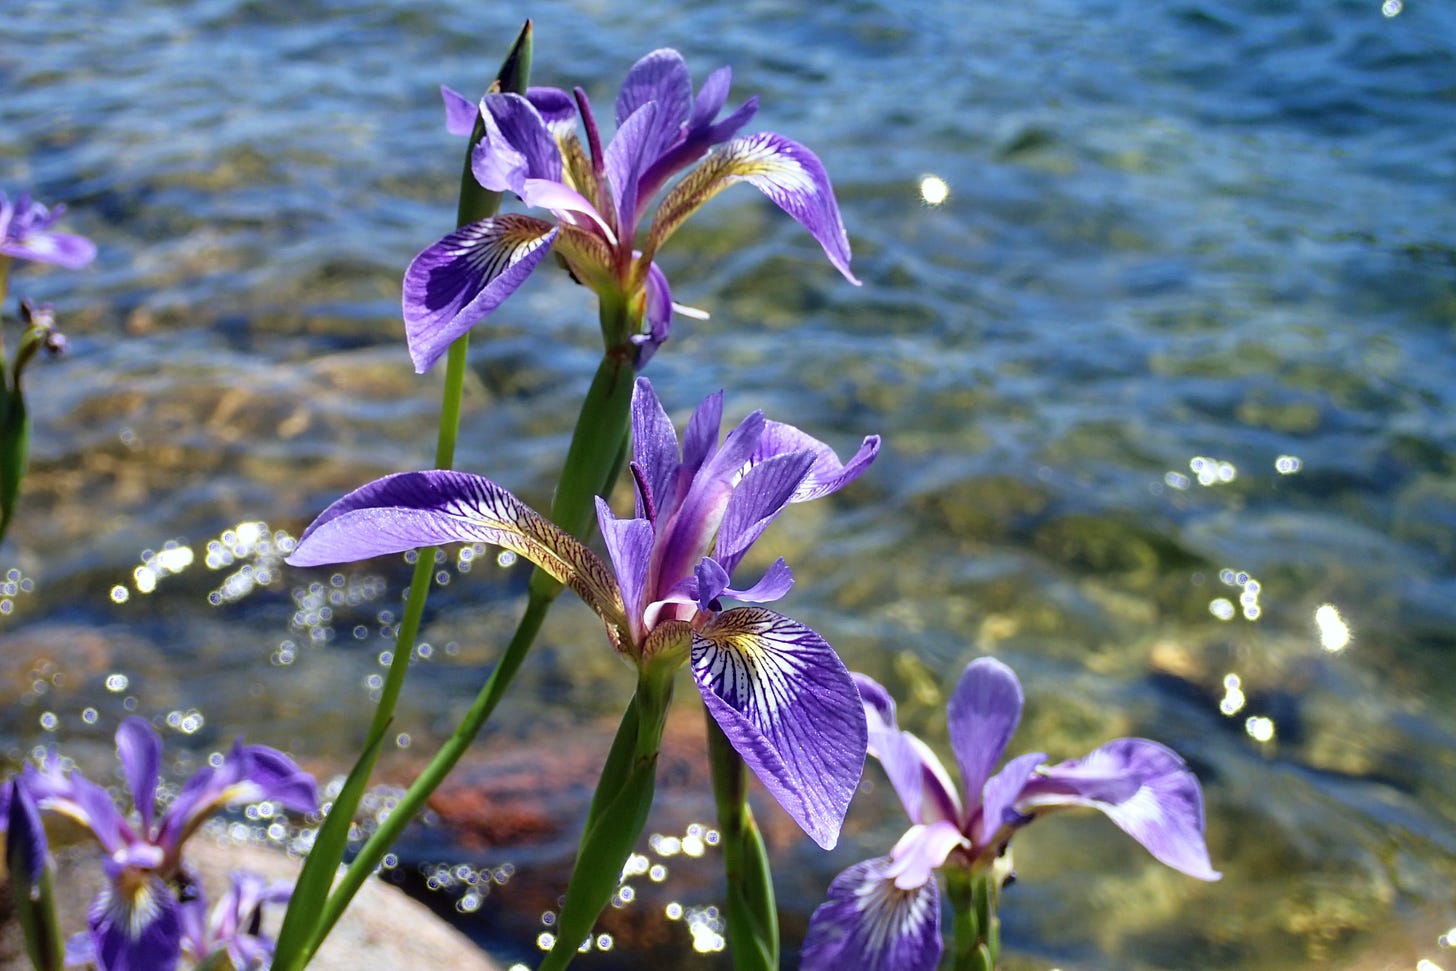 Northern Blue Flag Irises bloom along the shores of Jordan Pond in Acadia National Park.